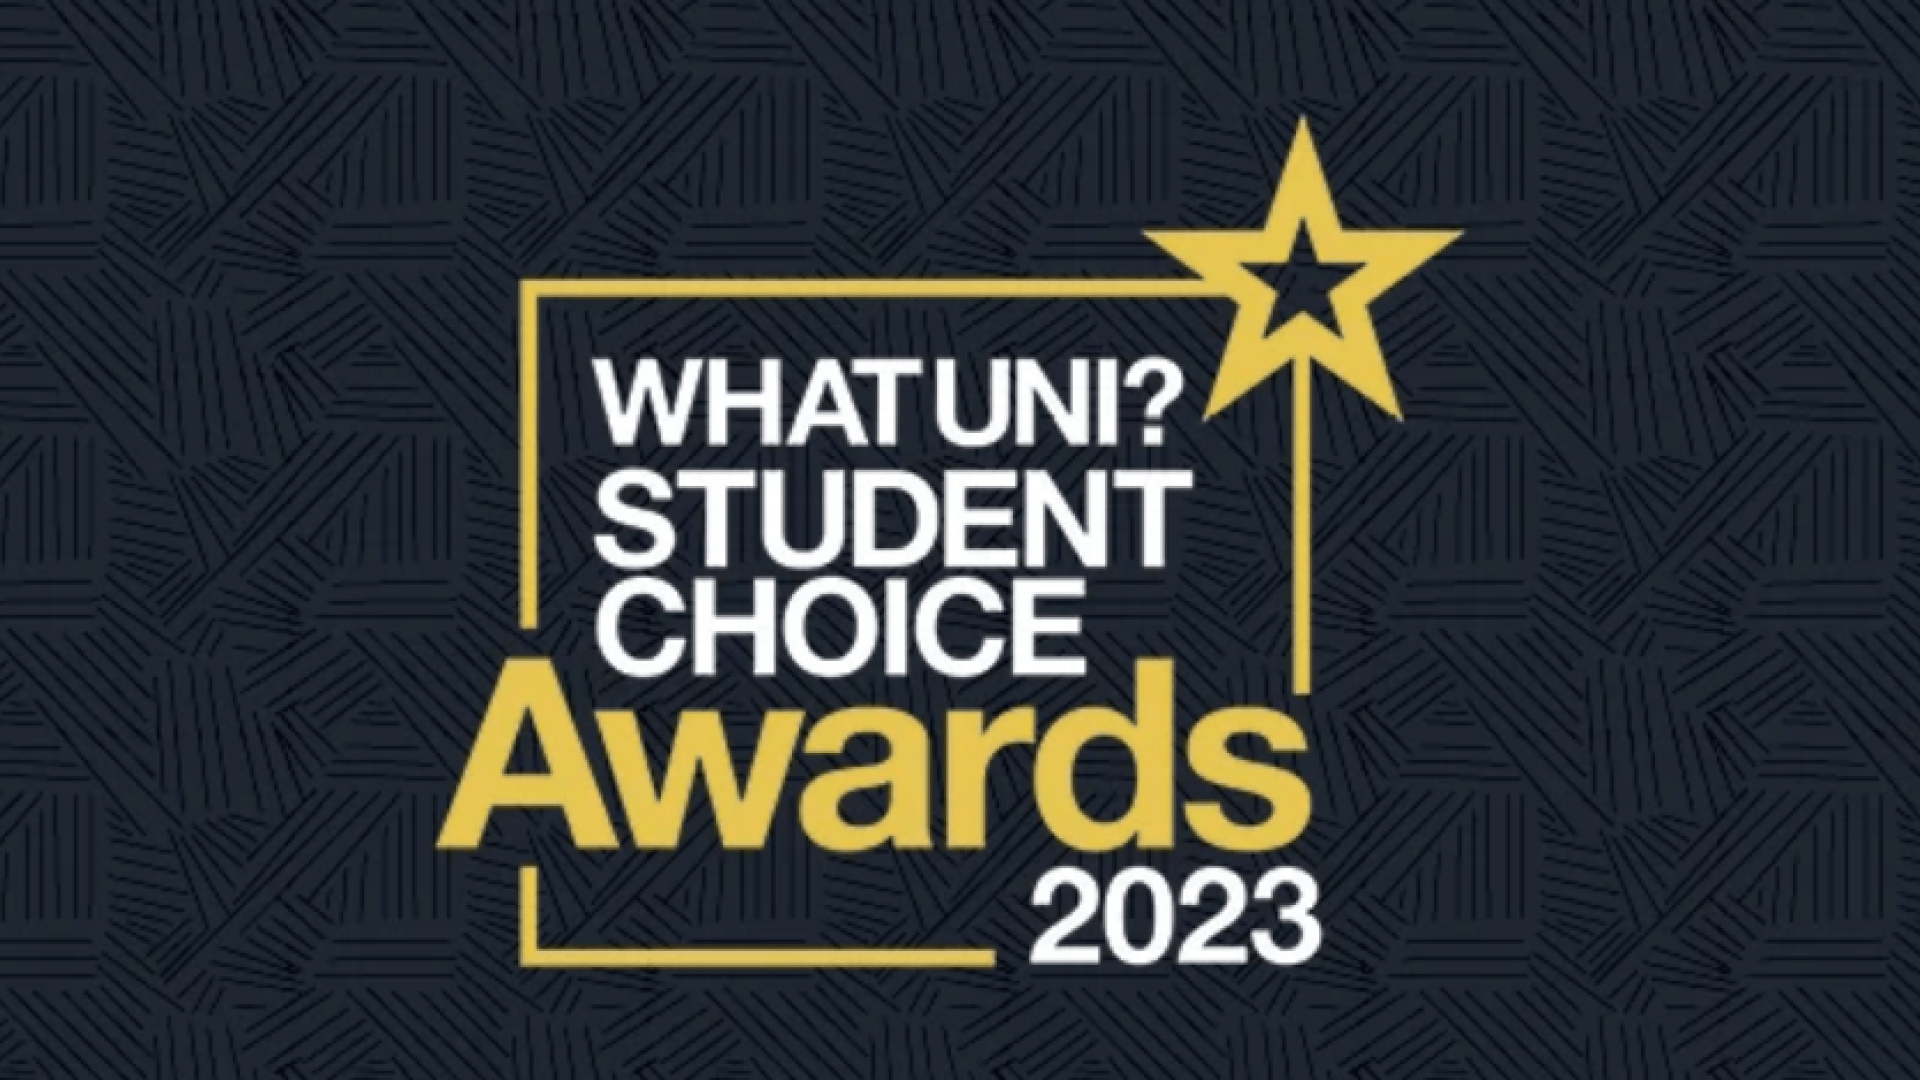 WhatUni? Student Choice Awards 2023